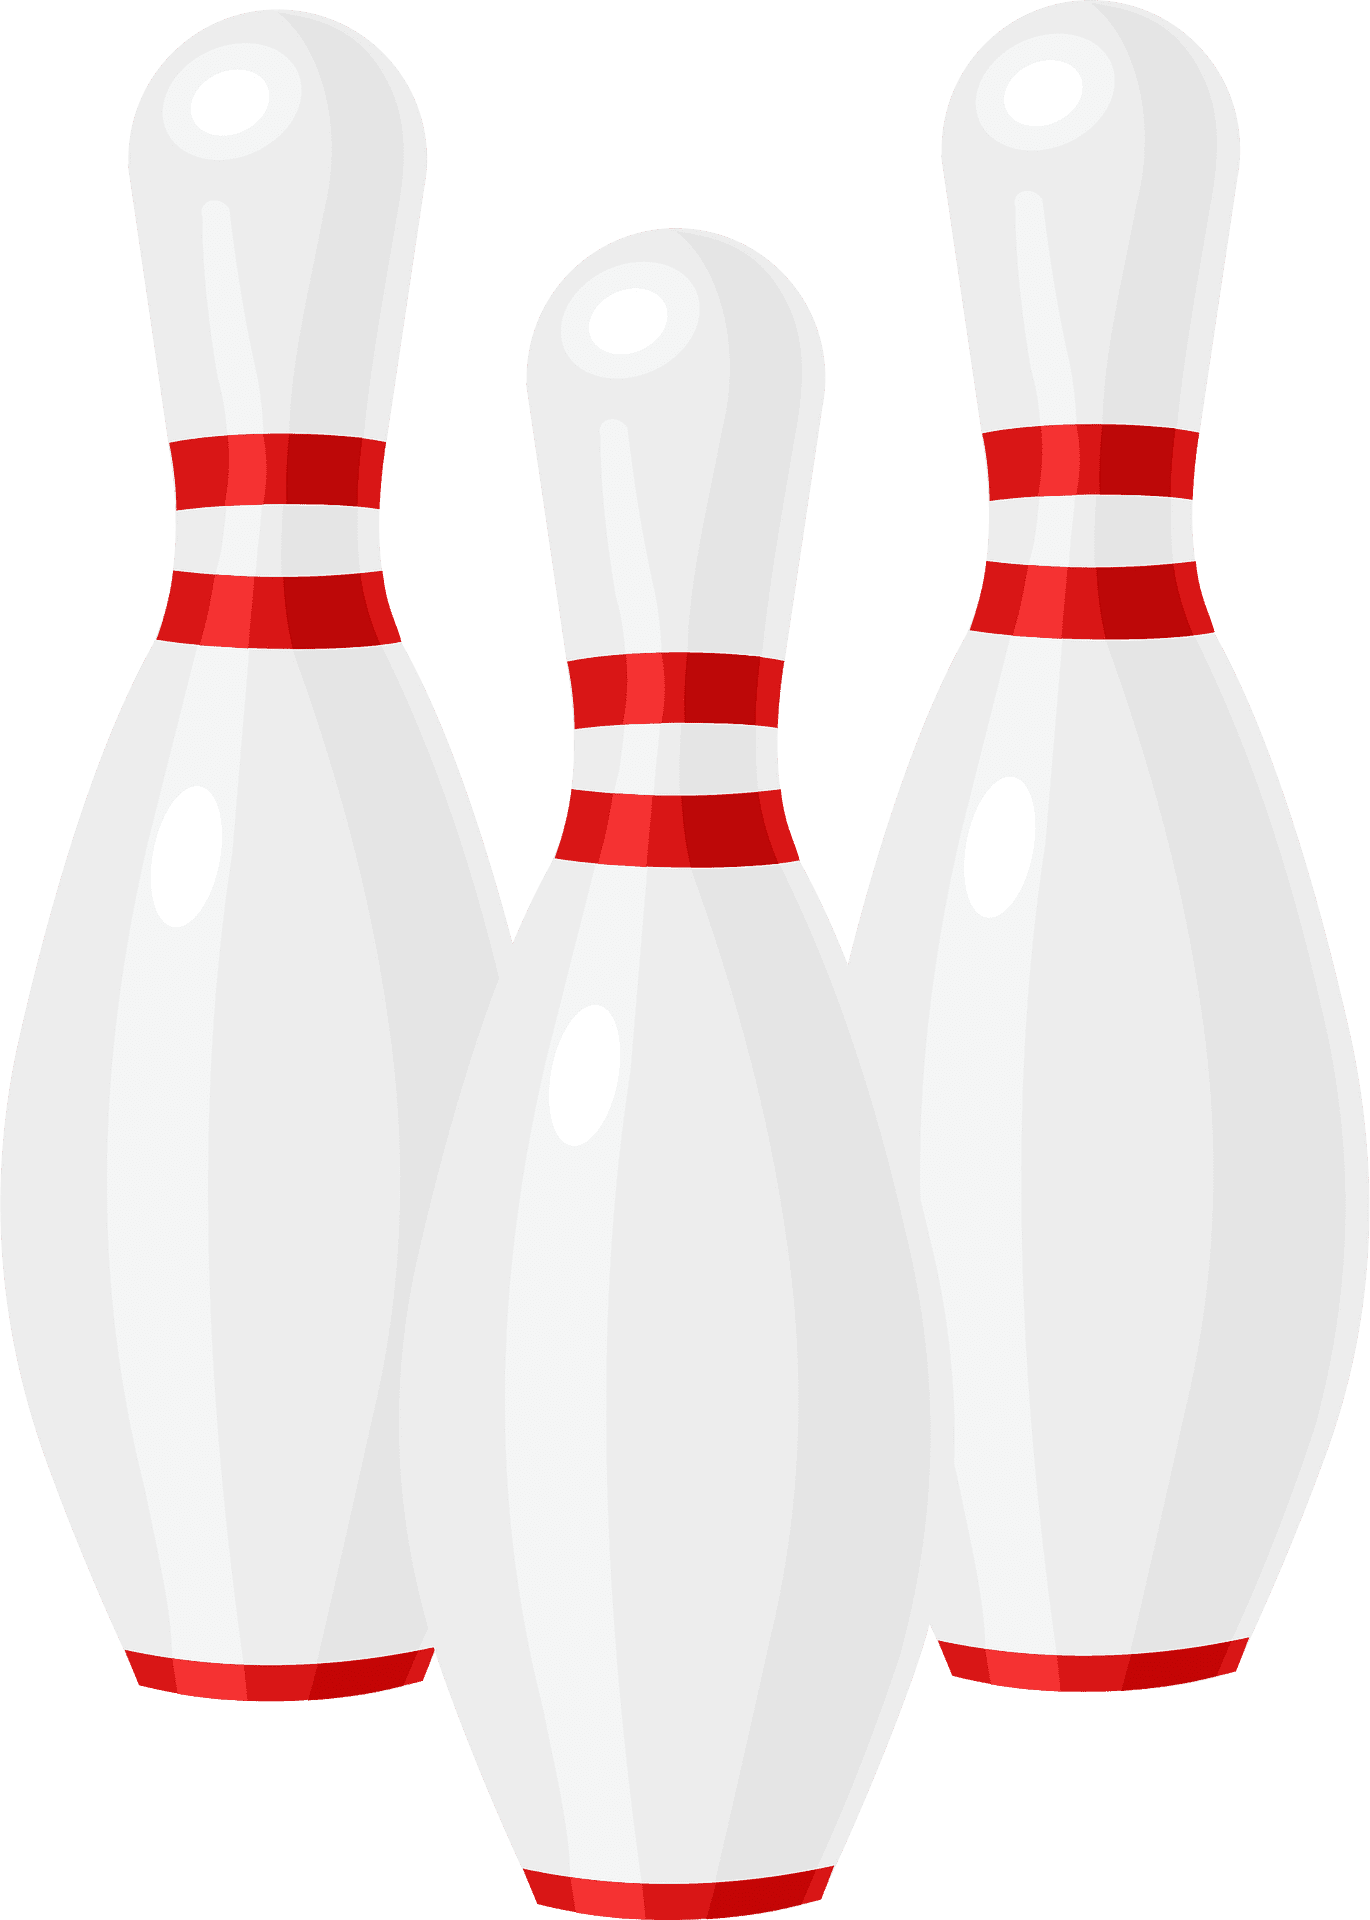 Bowling pin clipart vector